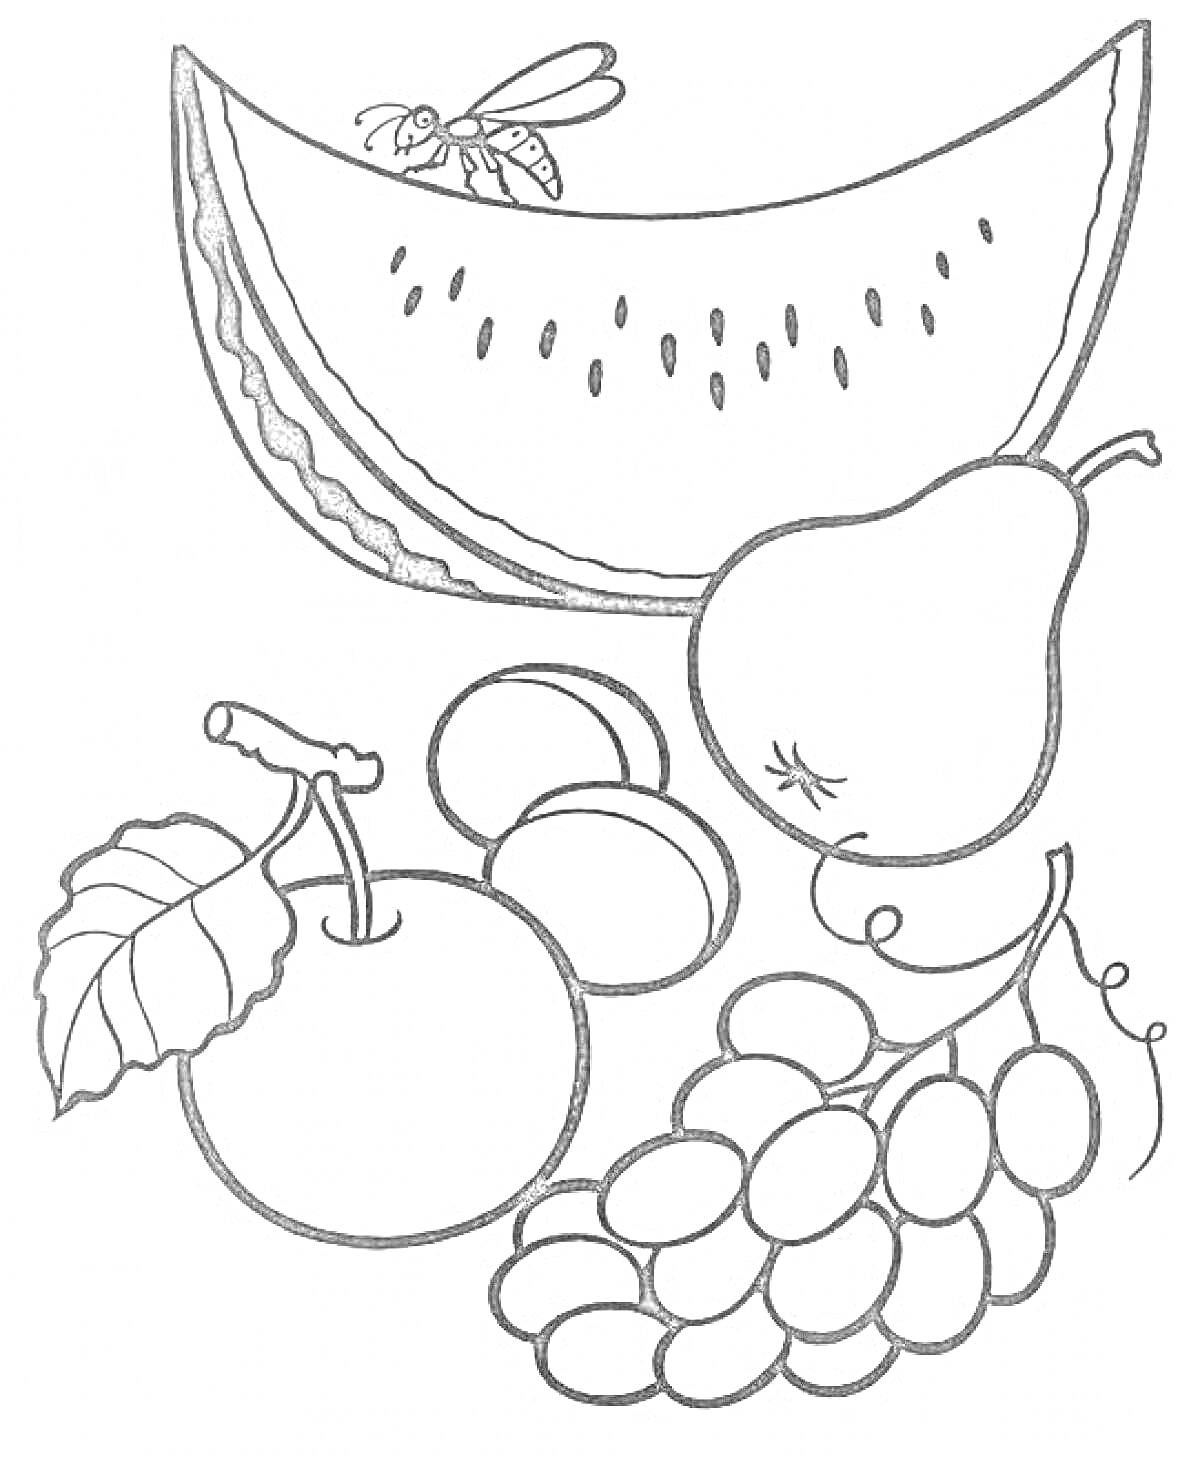 Арбуз, груша, виноград, яблоко, слива и муха